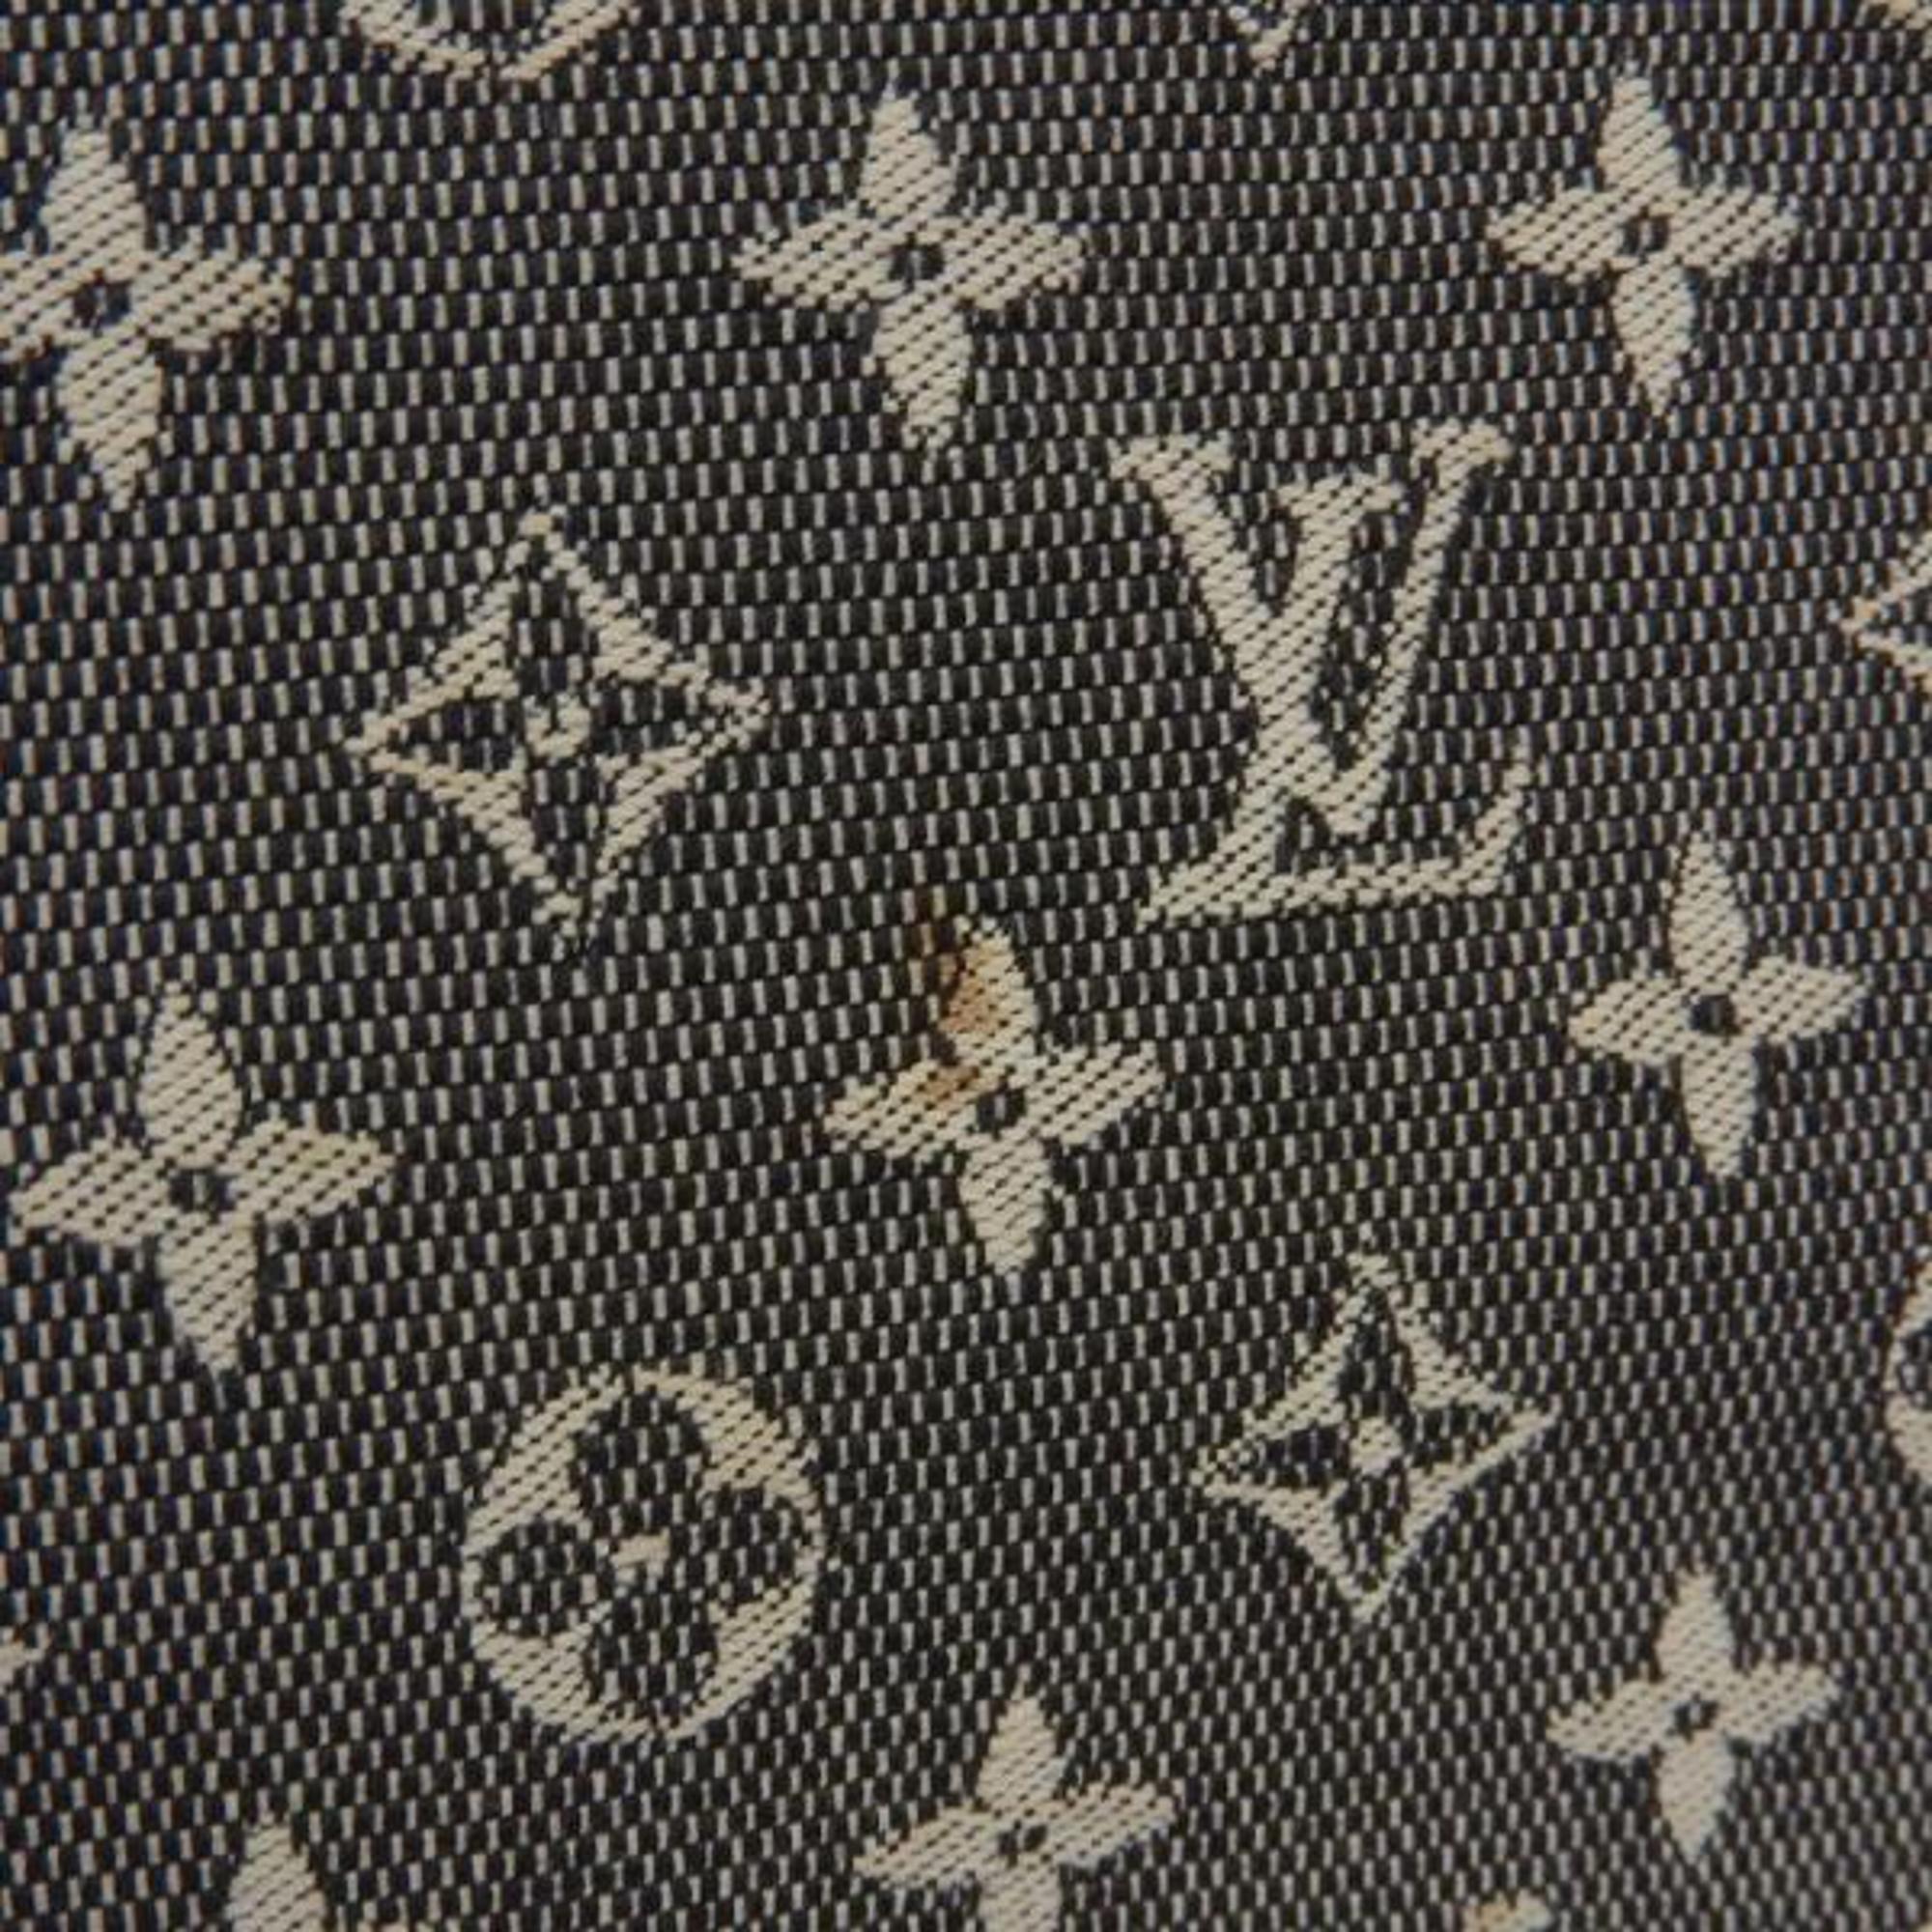 Louis Vuitton Black Canvas Monogram Mini Lin Cabas Mary Kate Tote Bag